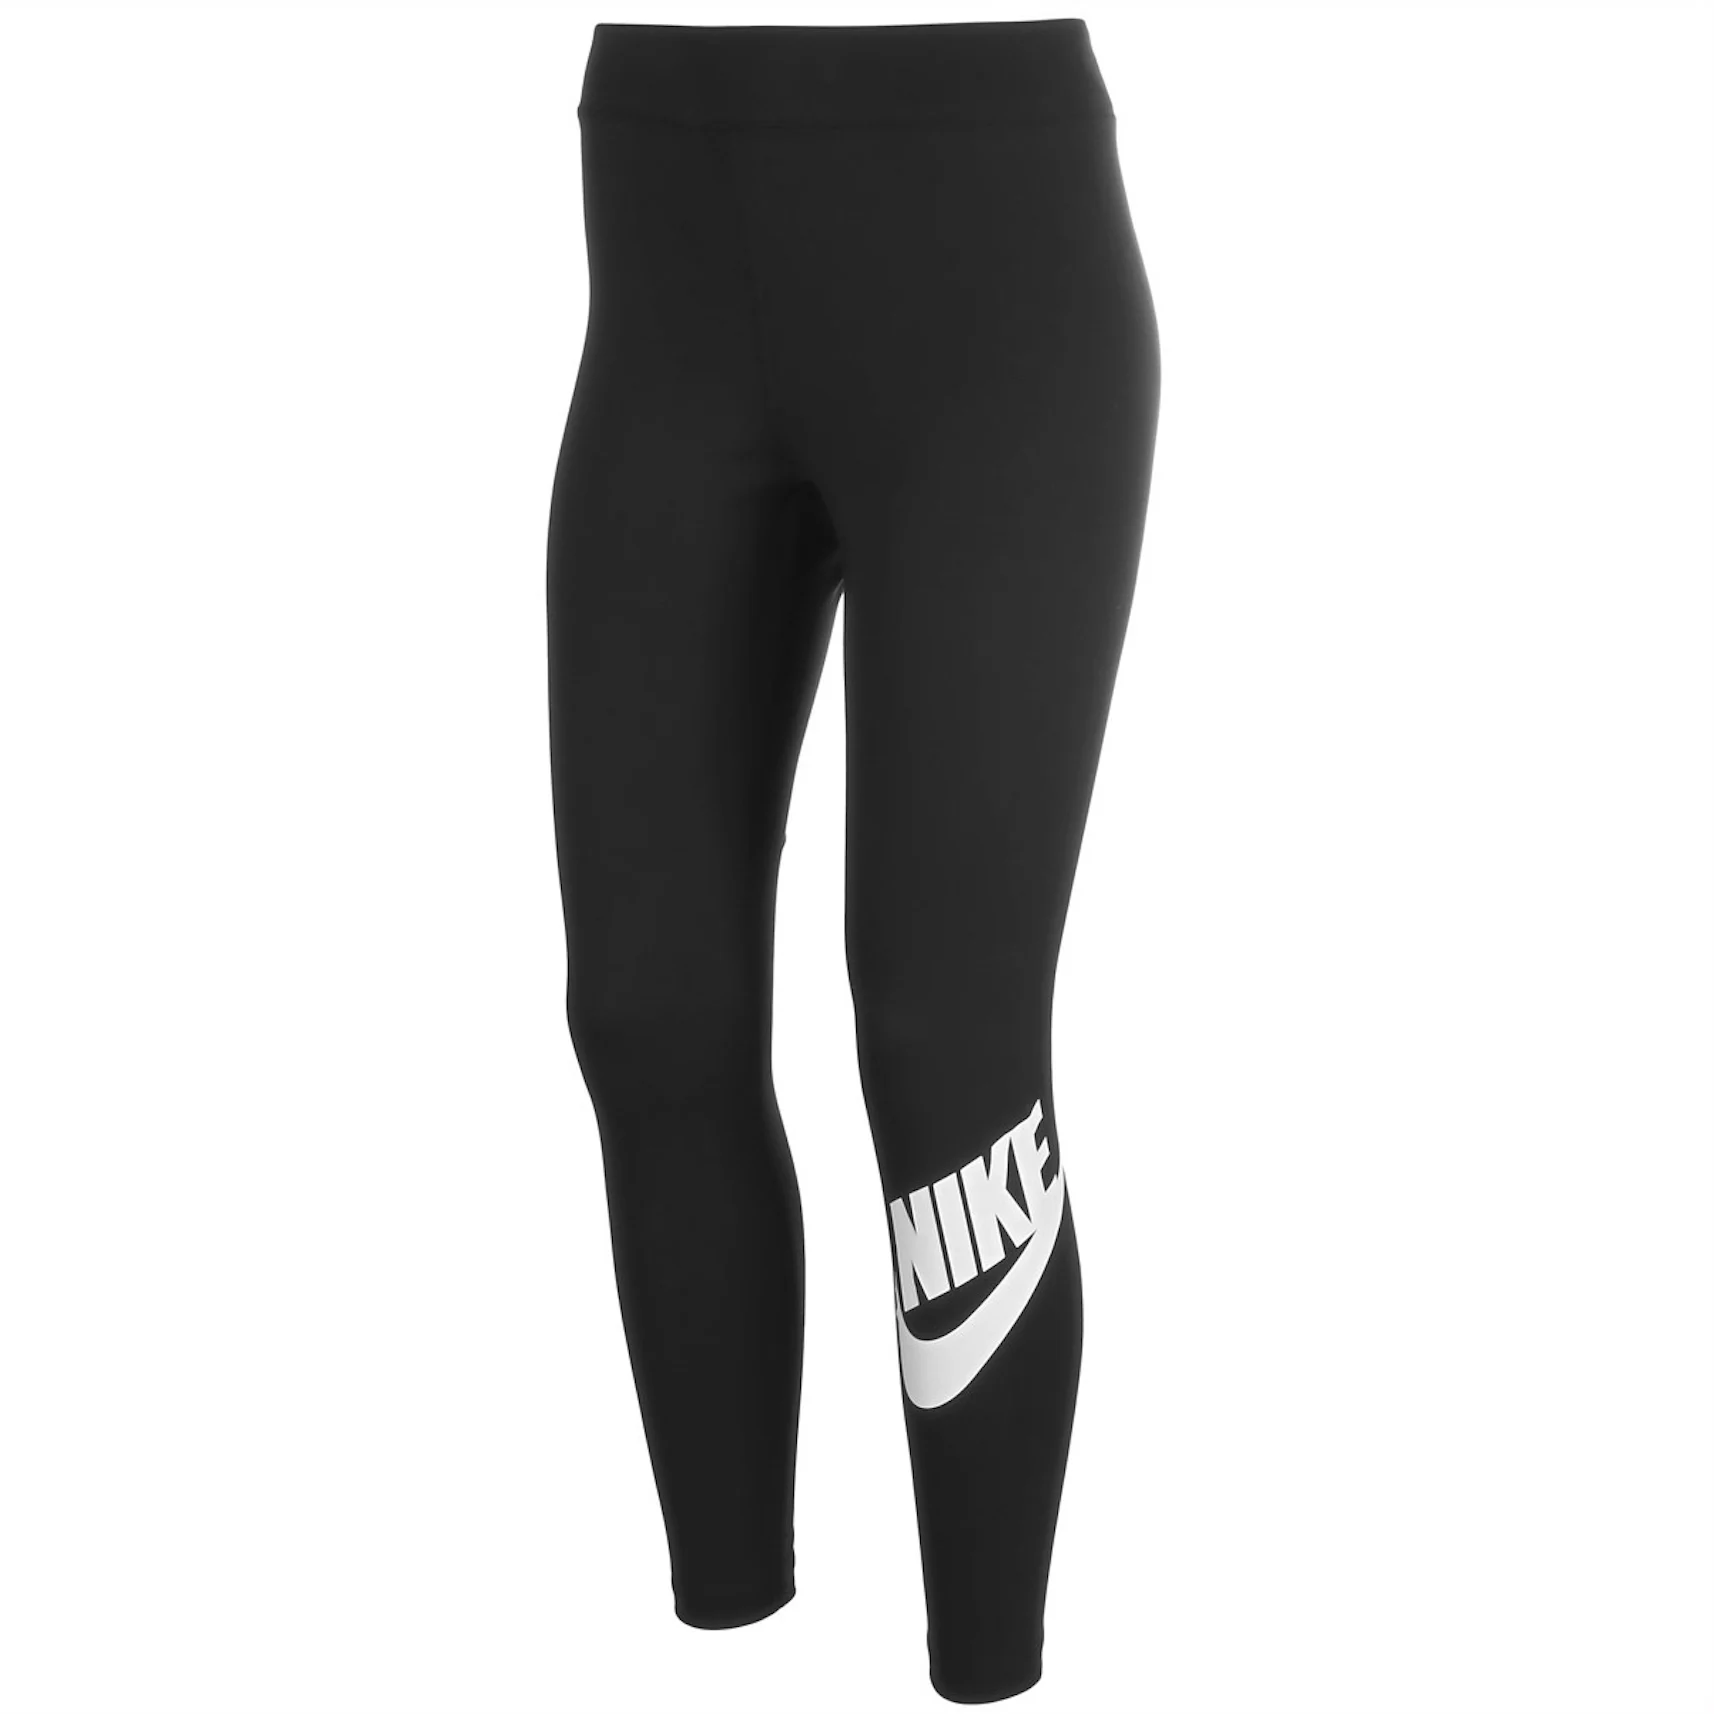 https://images.stockx.com/images/Nike-Sportswear-Womens-Essential-High-Waisted-Logo-Leggings-Black.jpg?fit=fill&bg=FFFFFF&w=1200&h=857&fm=webp&auto=compress&dpr=2&trim=color&updated_at=1691687126&q=60